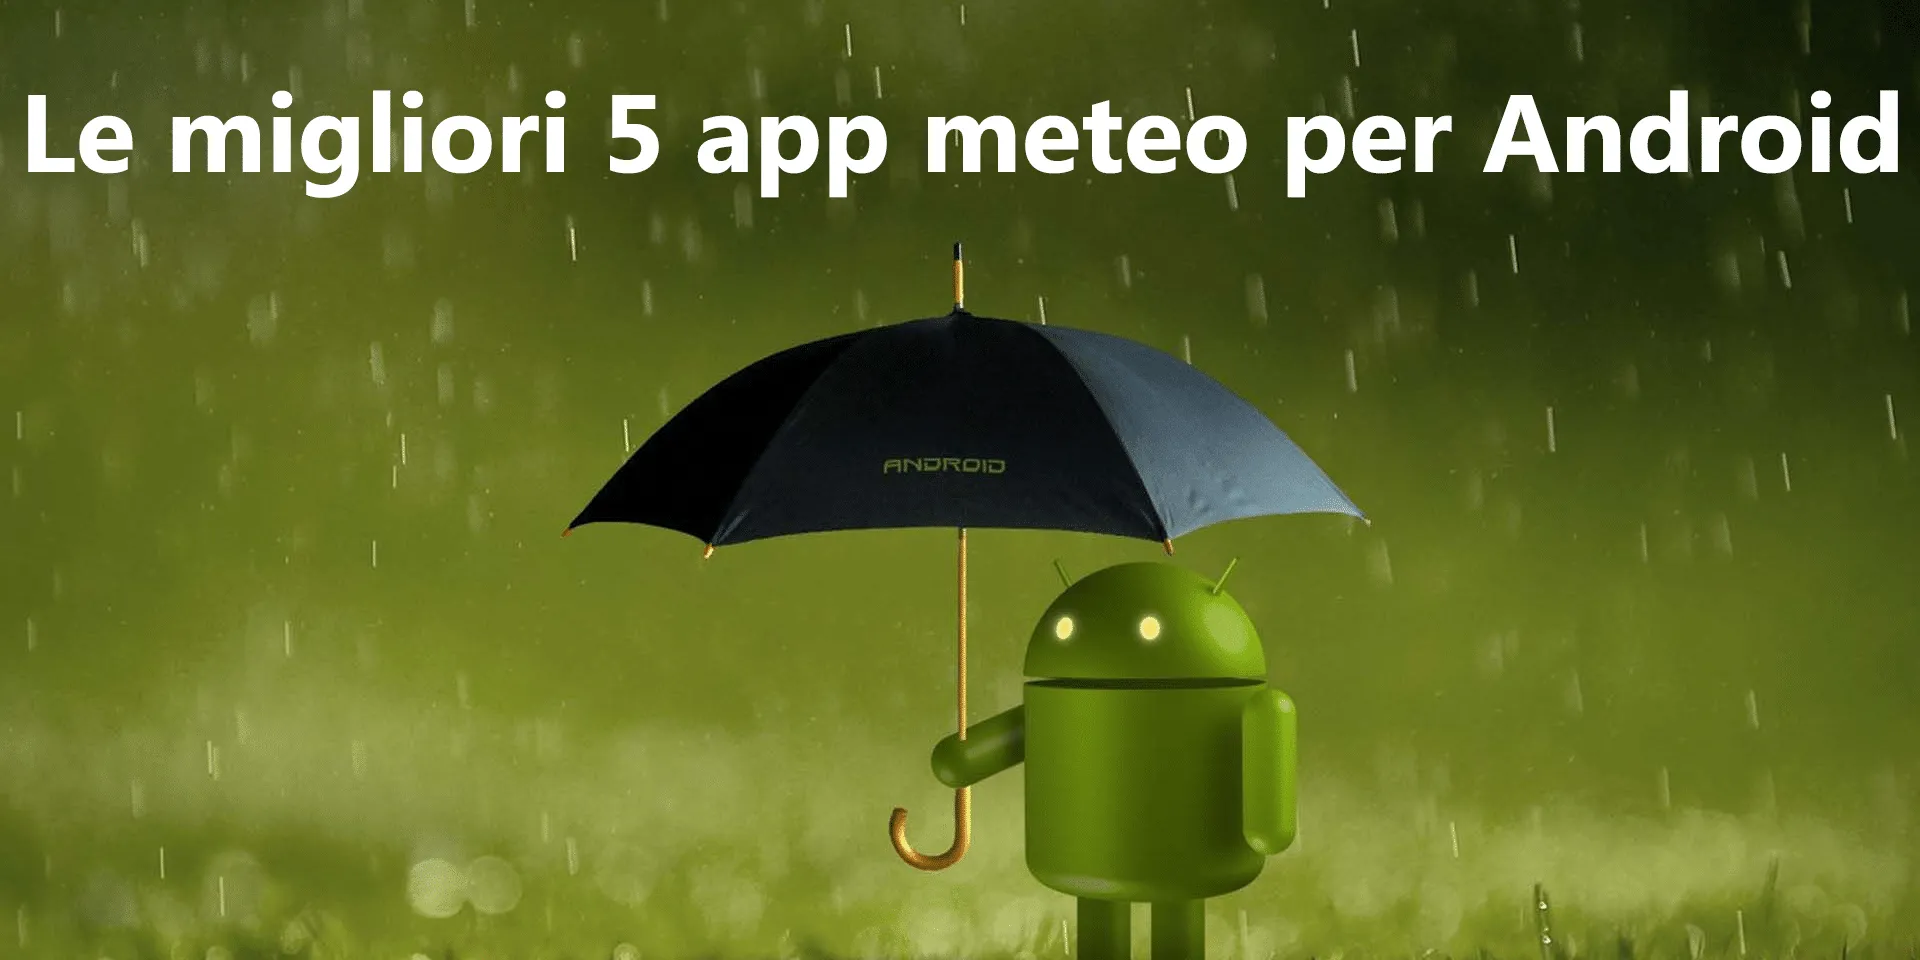 Le migliori 5 app meteo per Android